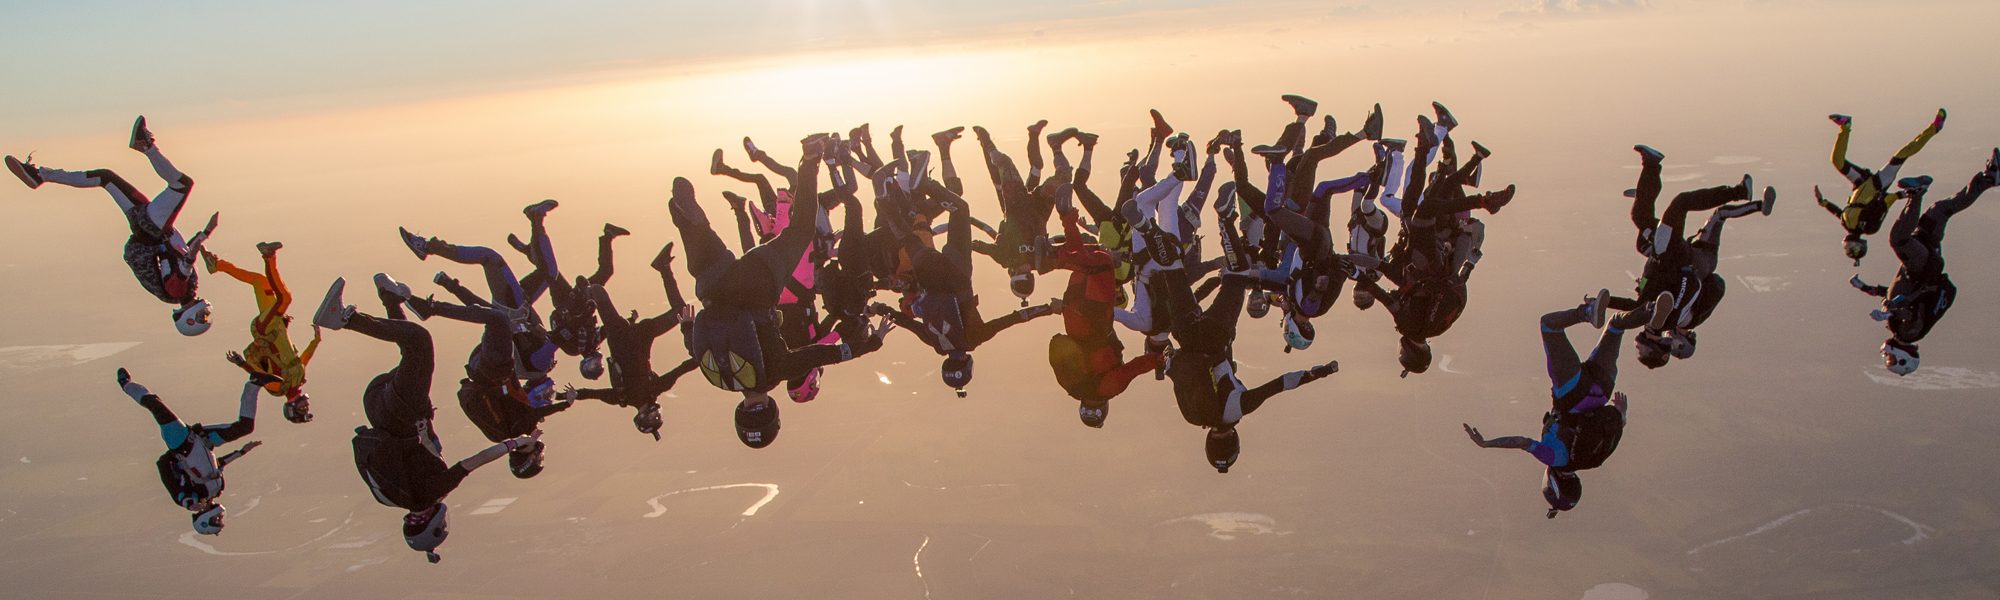 Head-down skydive